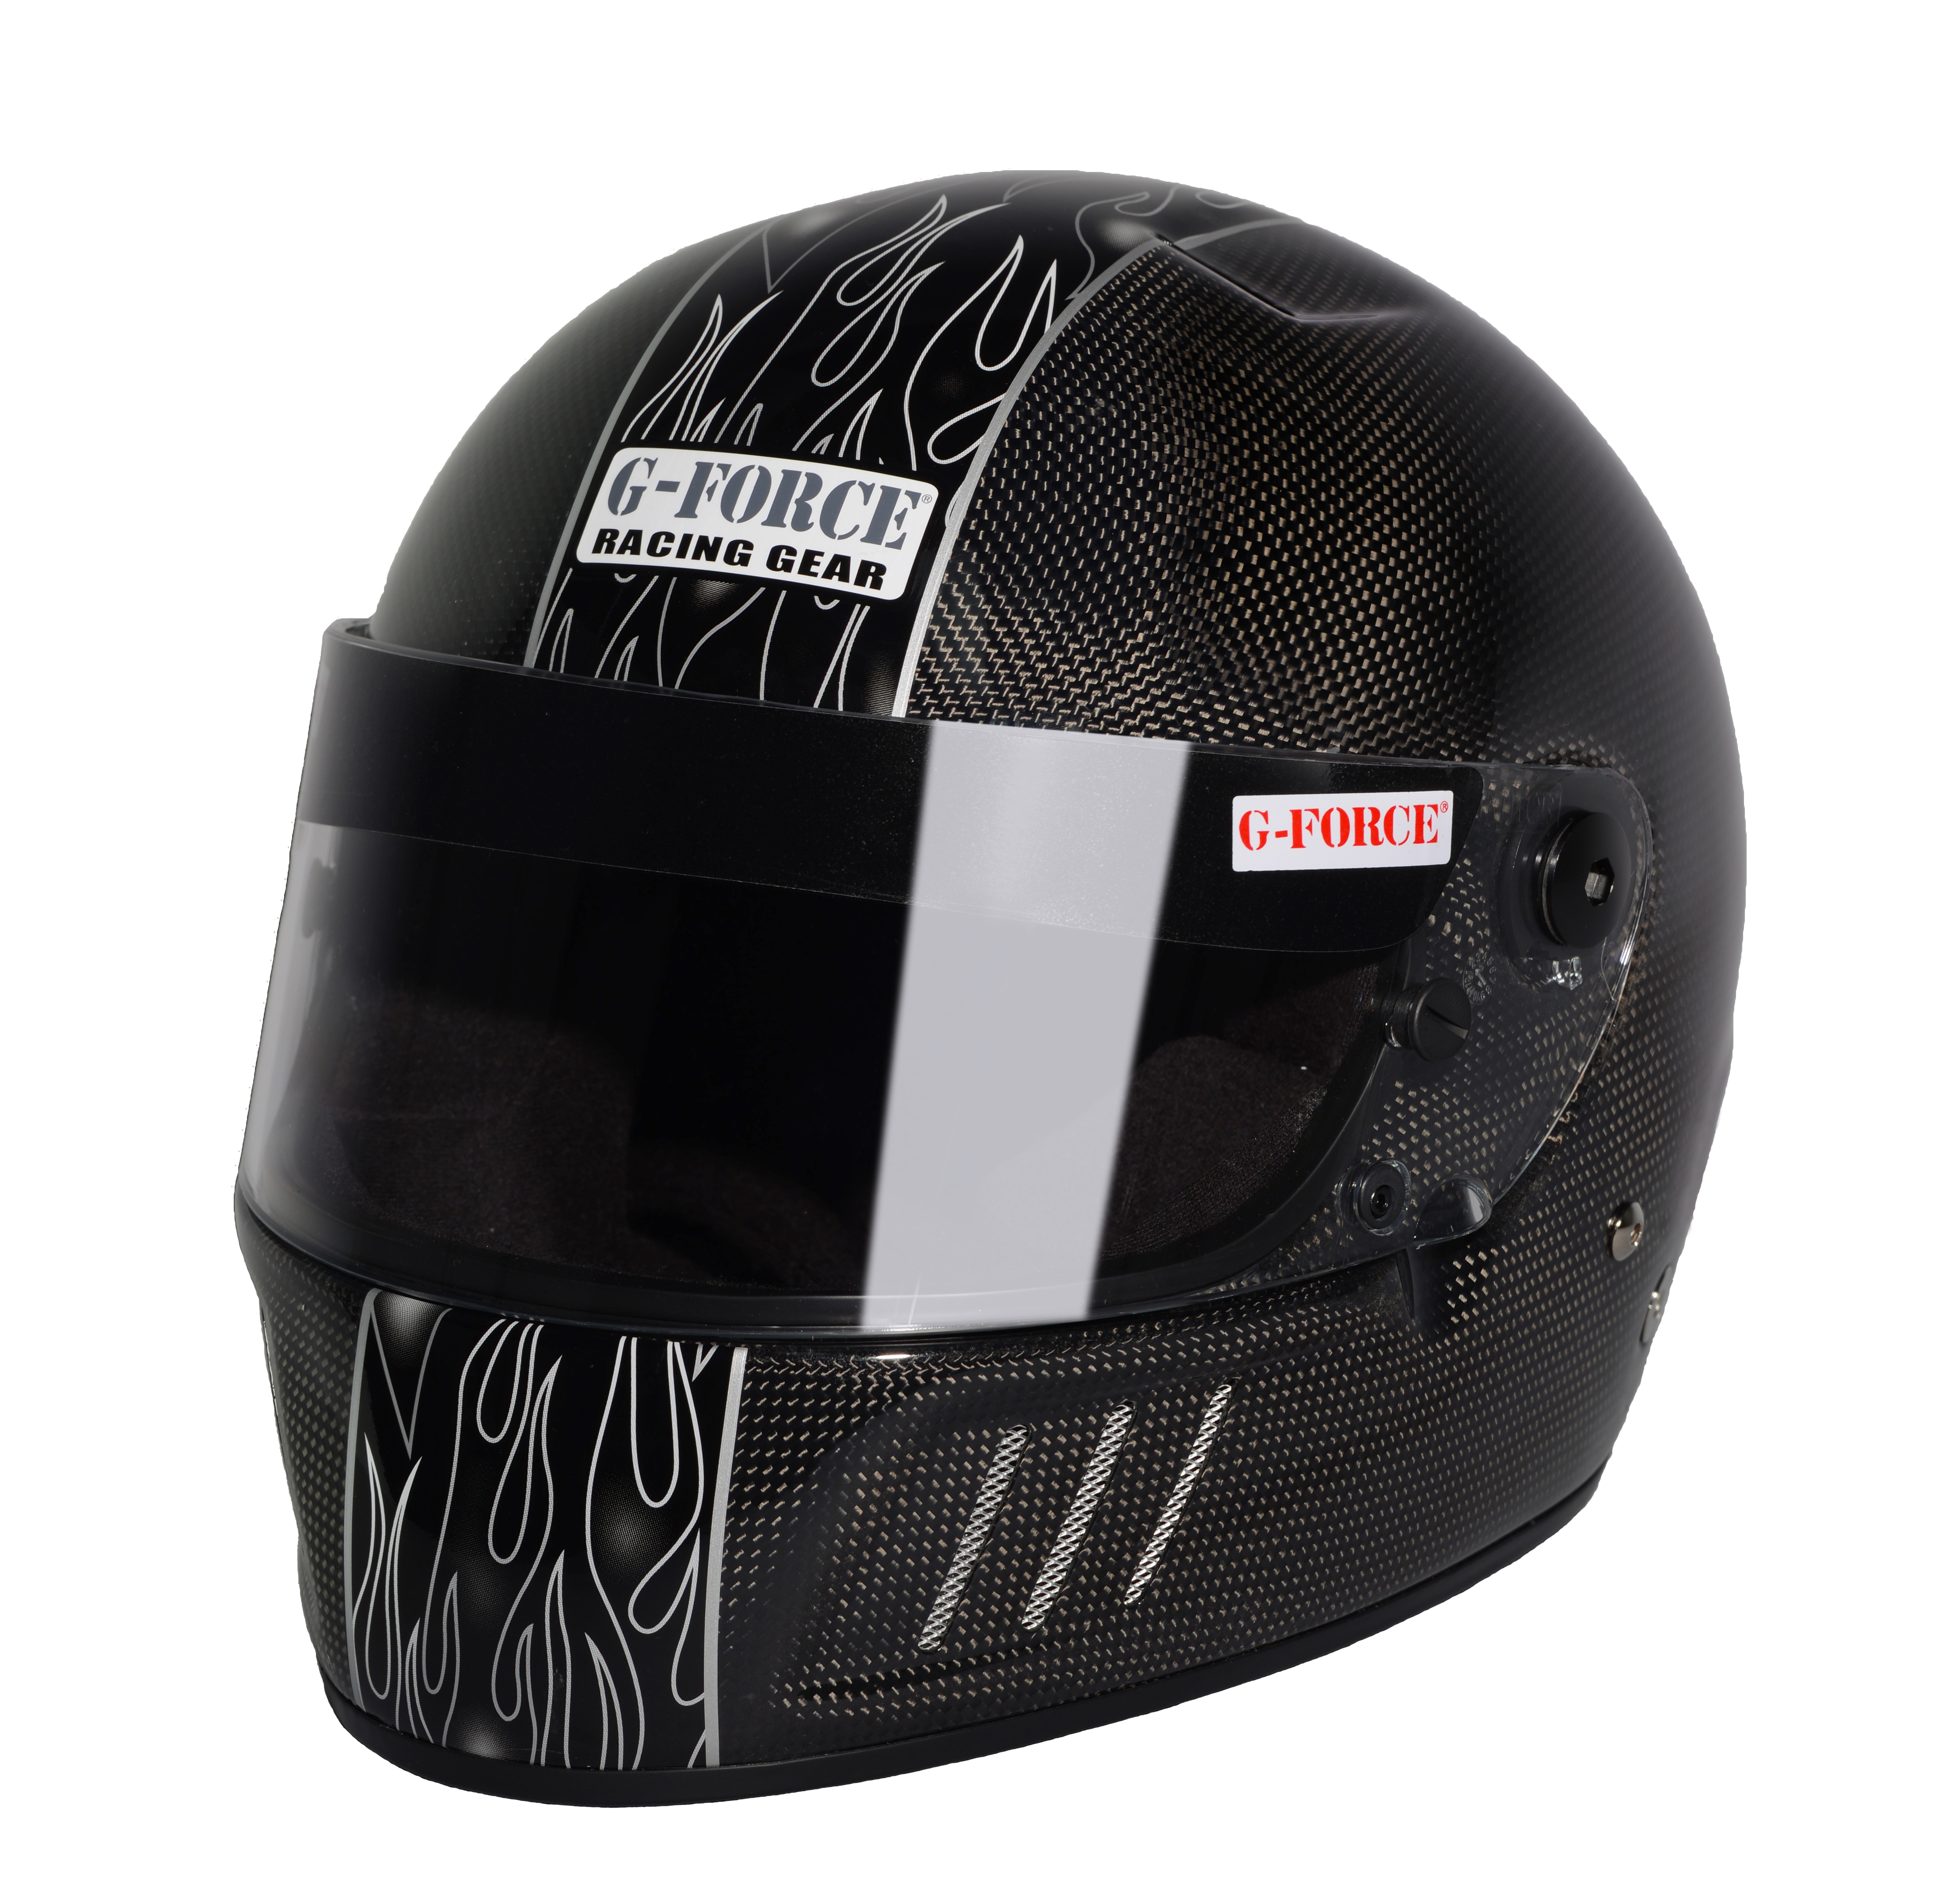 G-Force Racing Gear Helmet, PRO CFG SA2010 FULL FACE LARGE BLACK